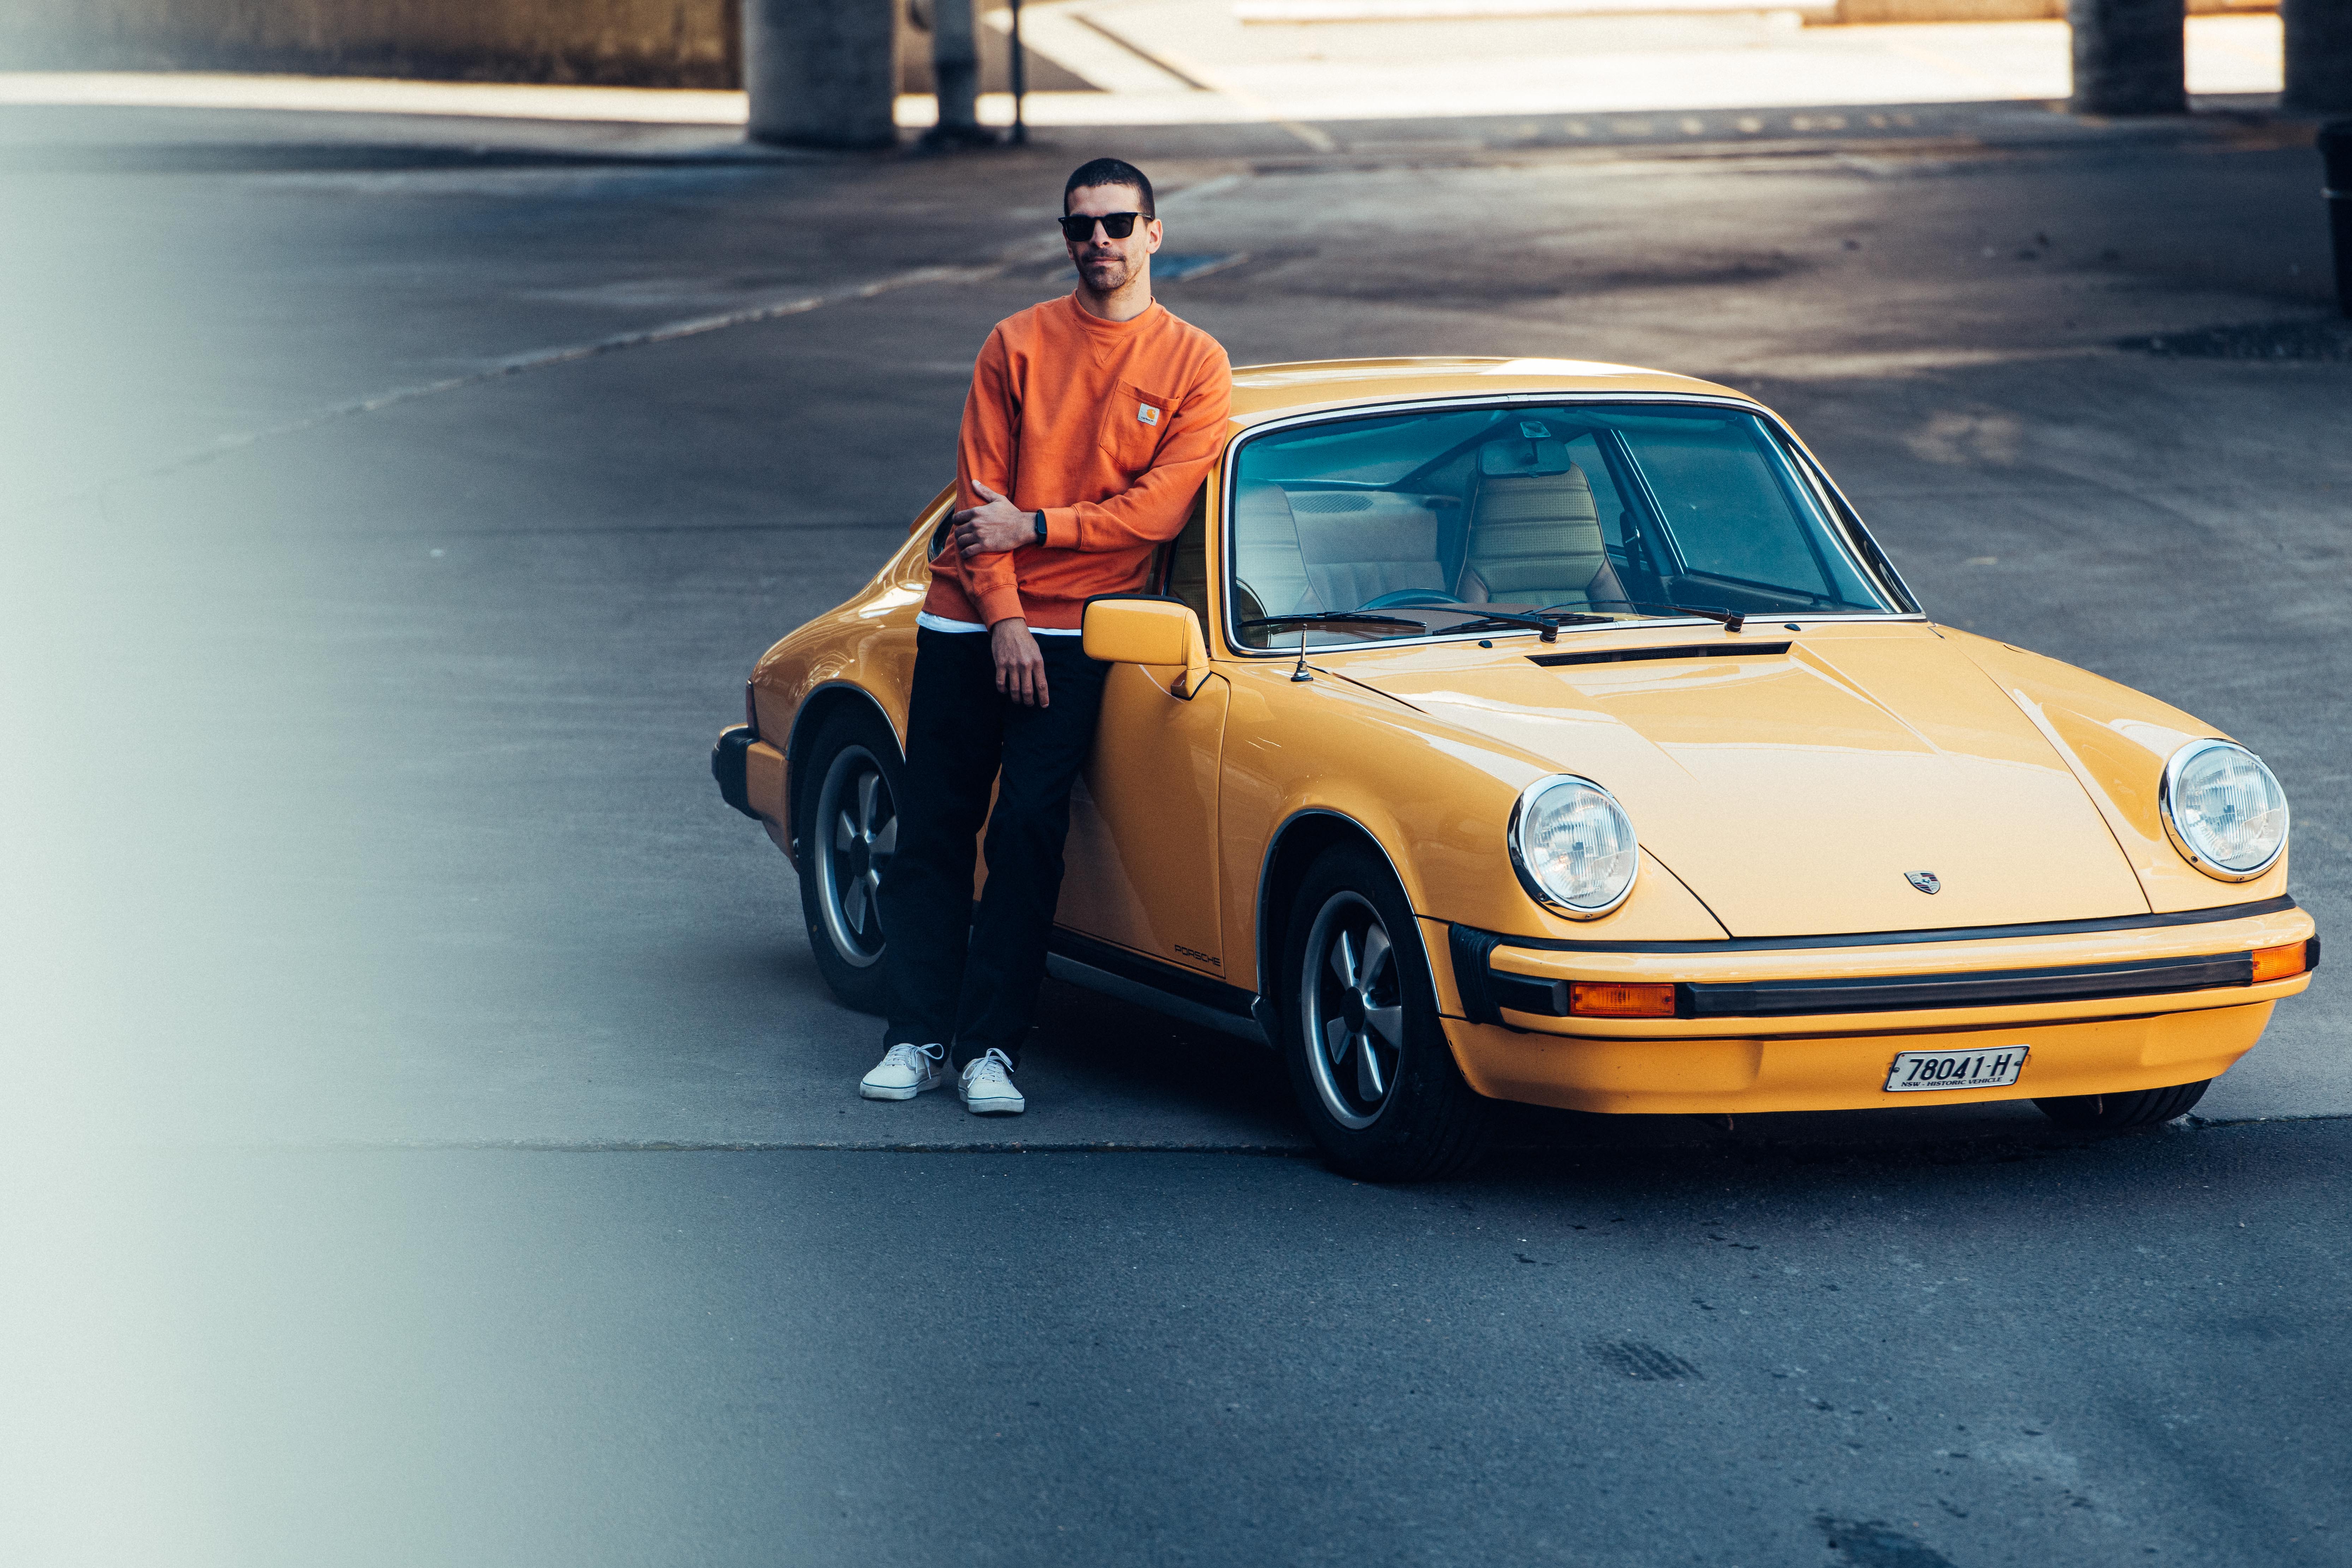 Man in orange jumper leans again classic yellow Porsche